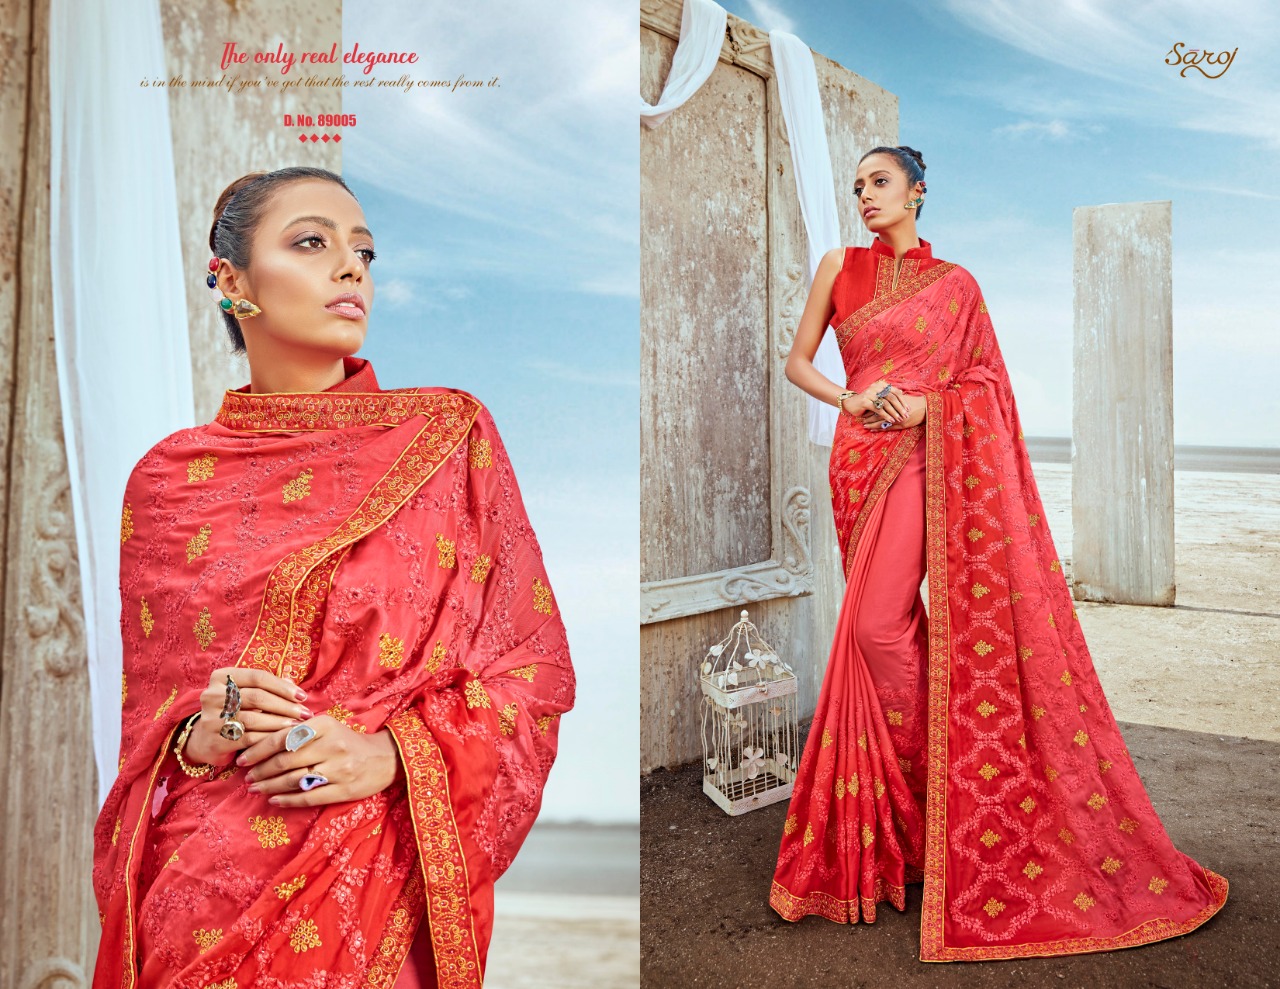 Saroj Saree Fashion Yug 89005